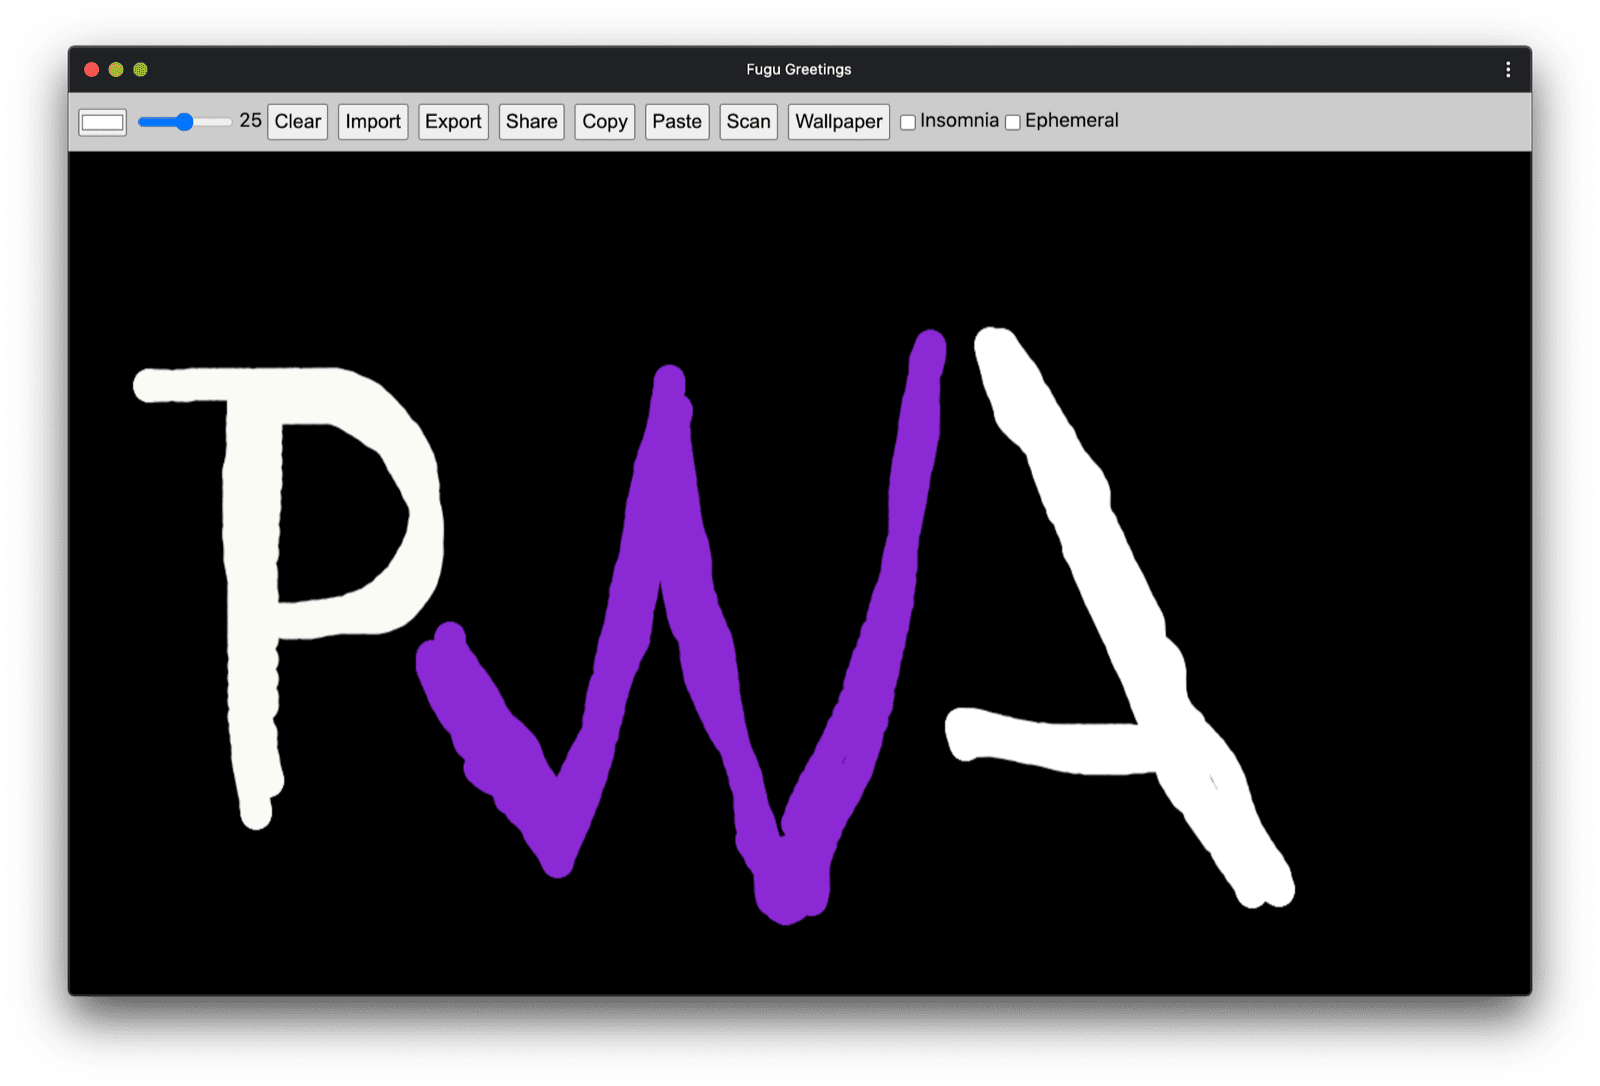 Fugu Greetings PWA with a drawing that resembles the PWA community logo.